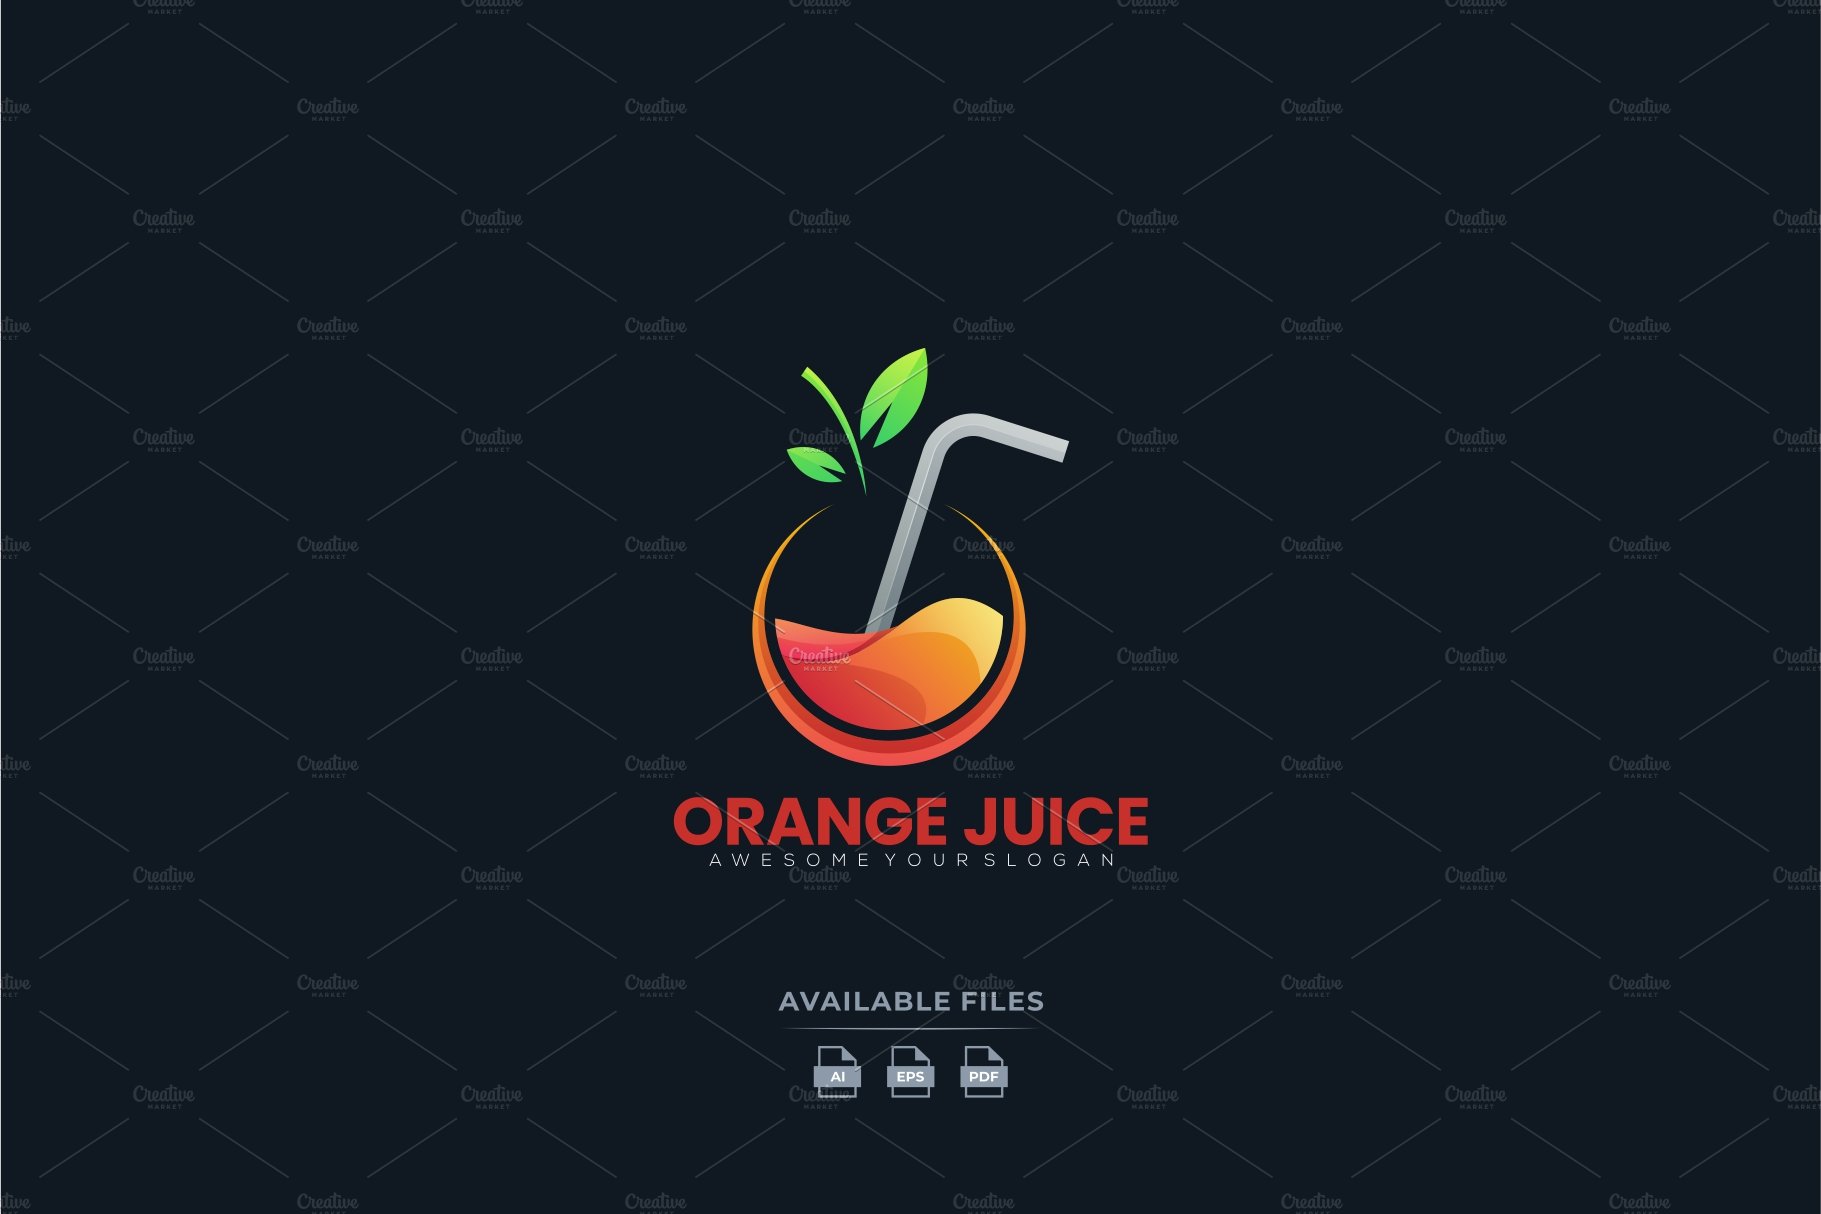 orange juice logo modern cover image.